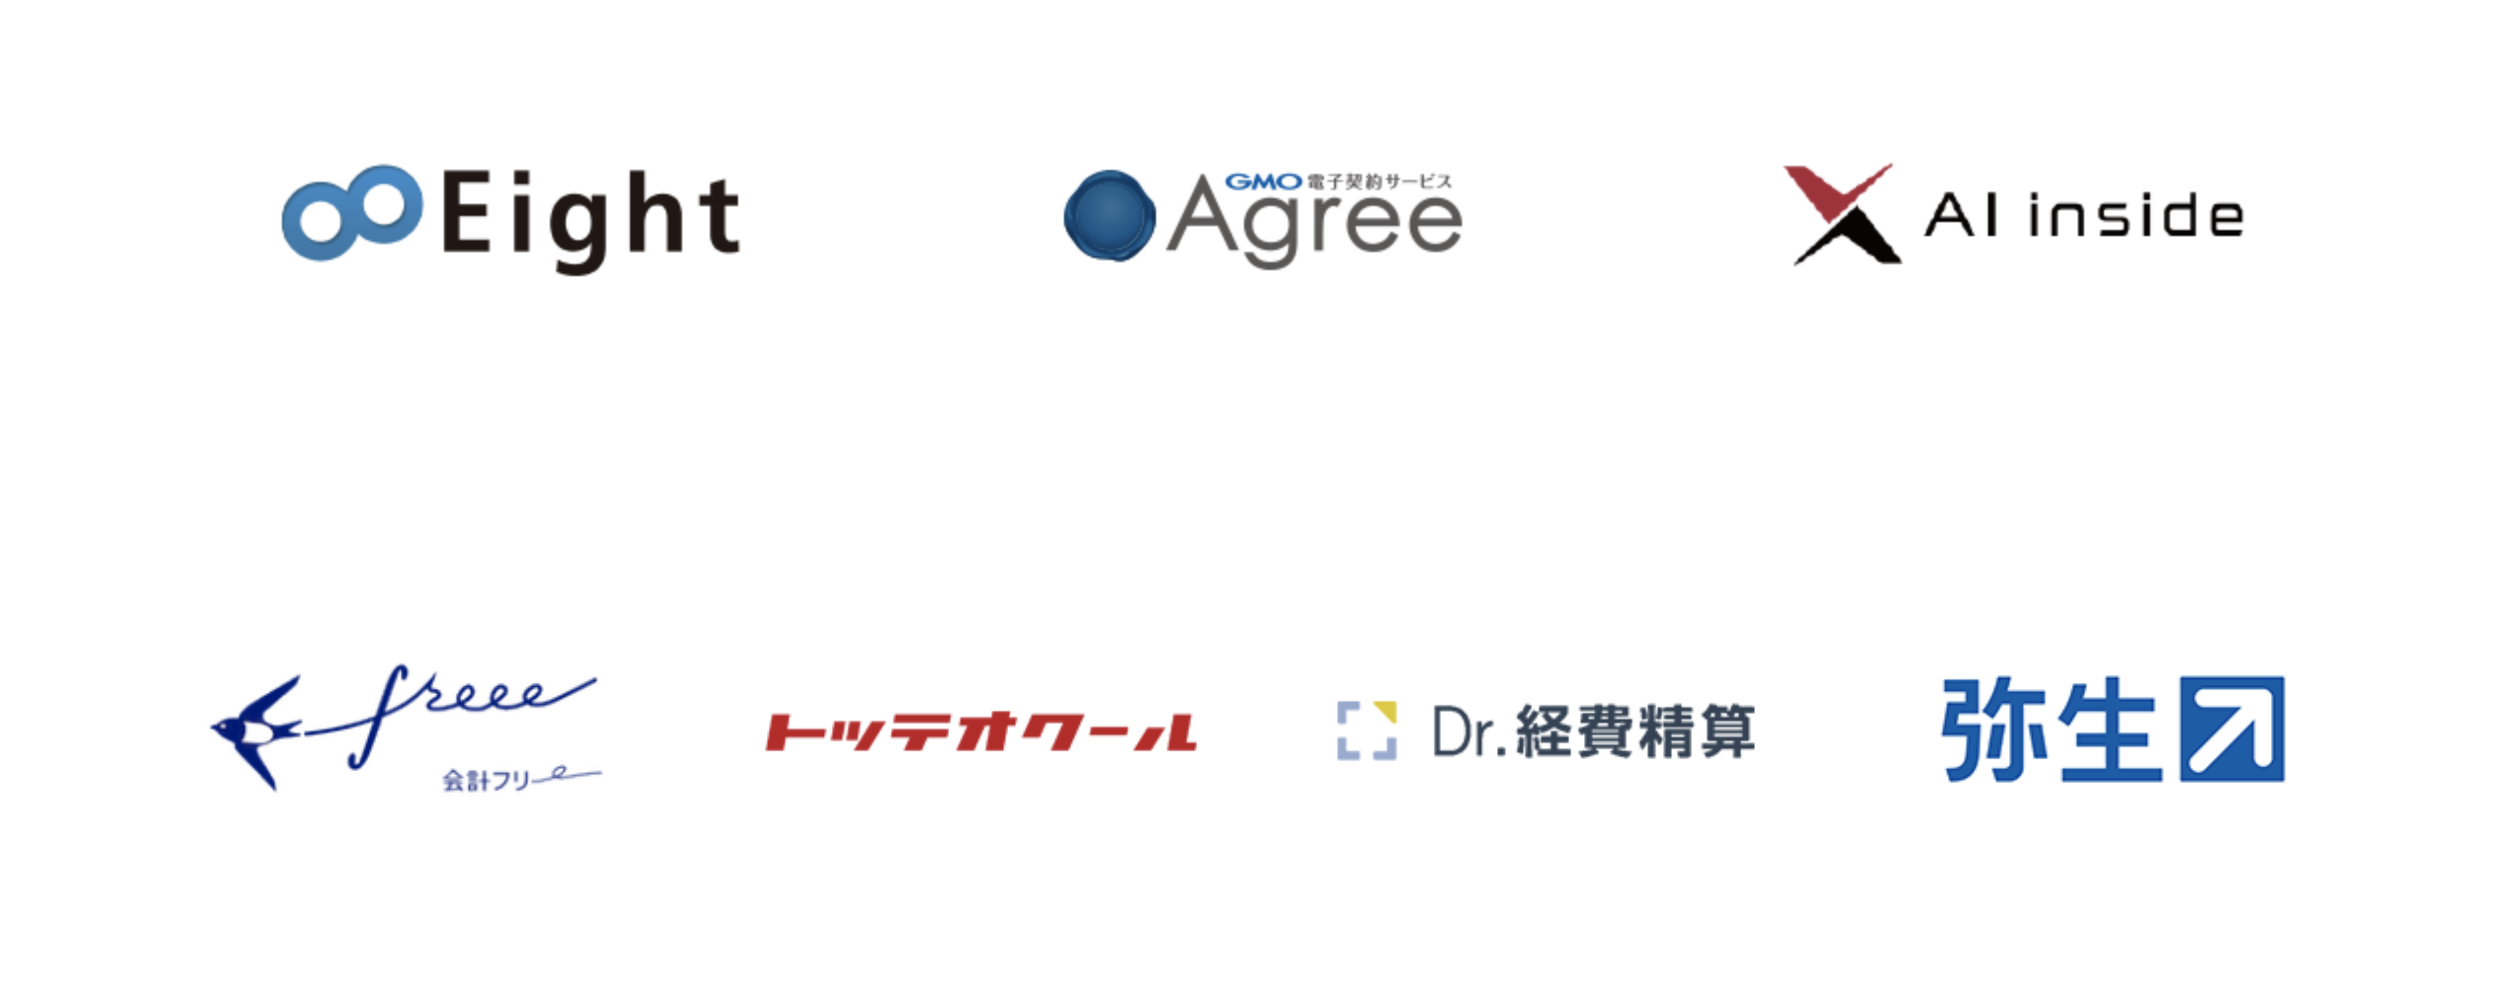 Eight, Agree, AI inside, freee, トッテオクール, Dr.経費精算,　弥生　ロゴ 